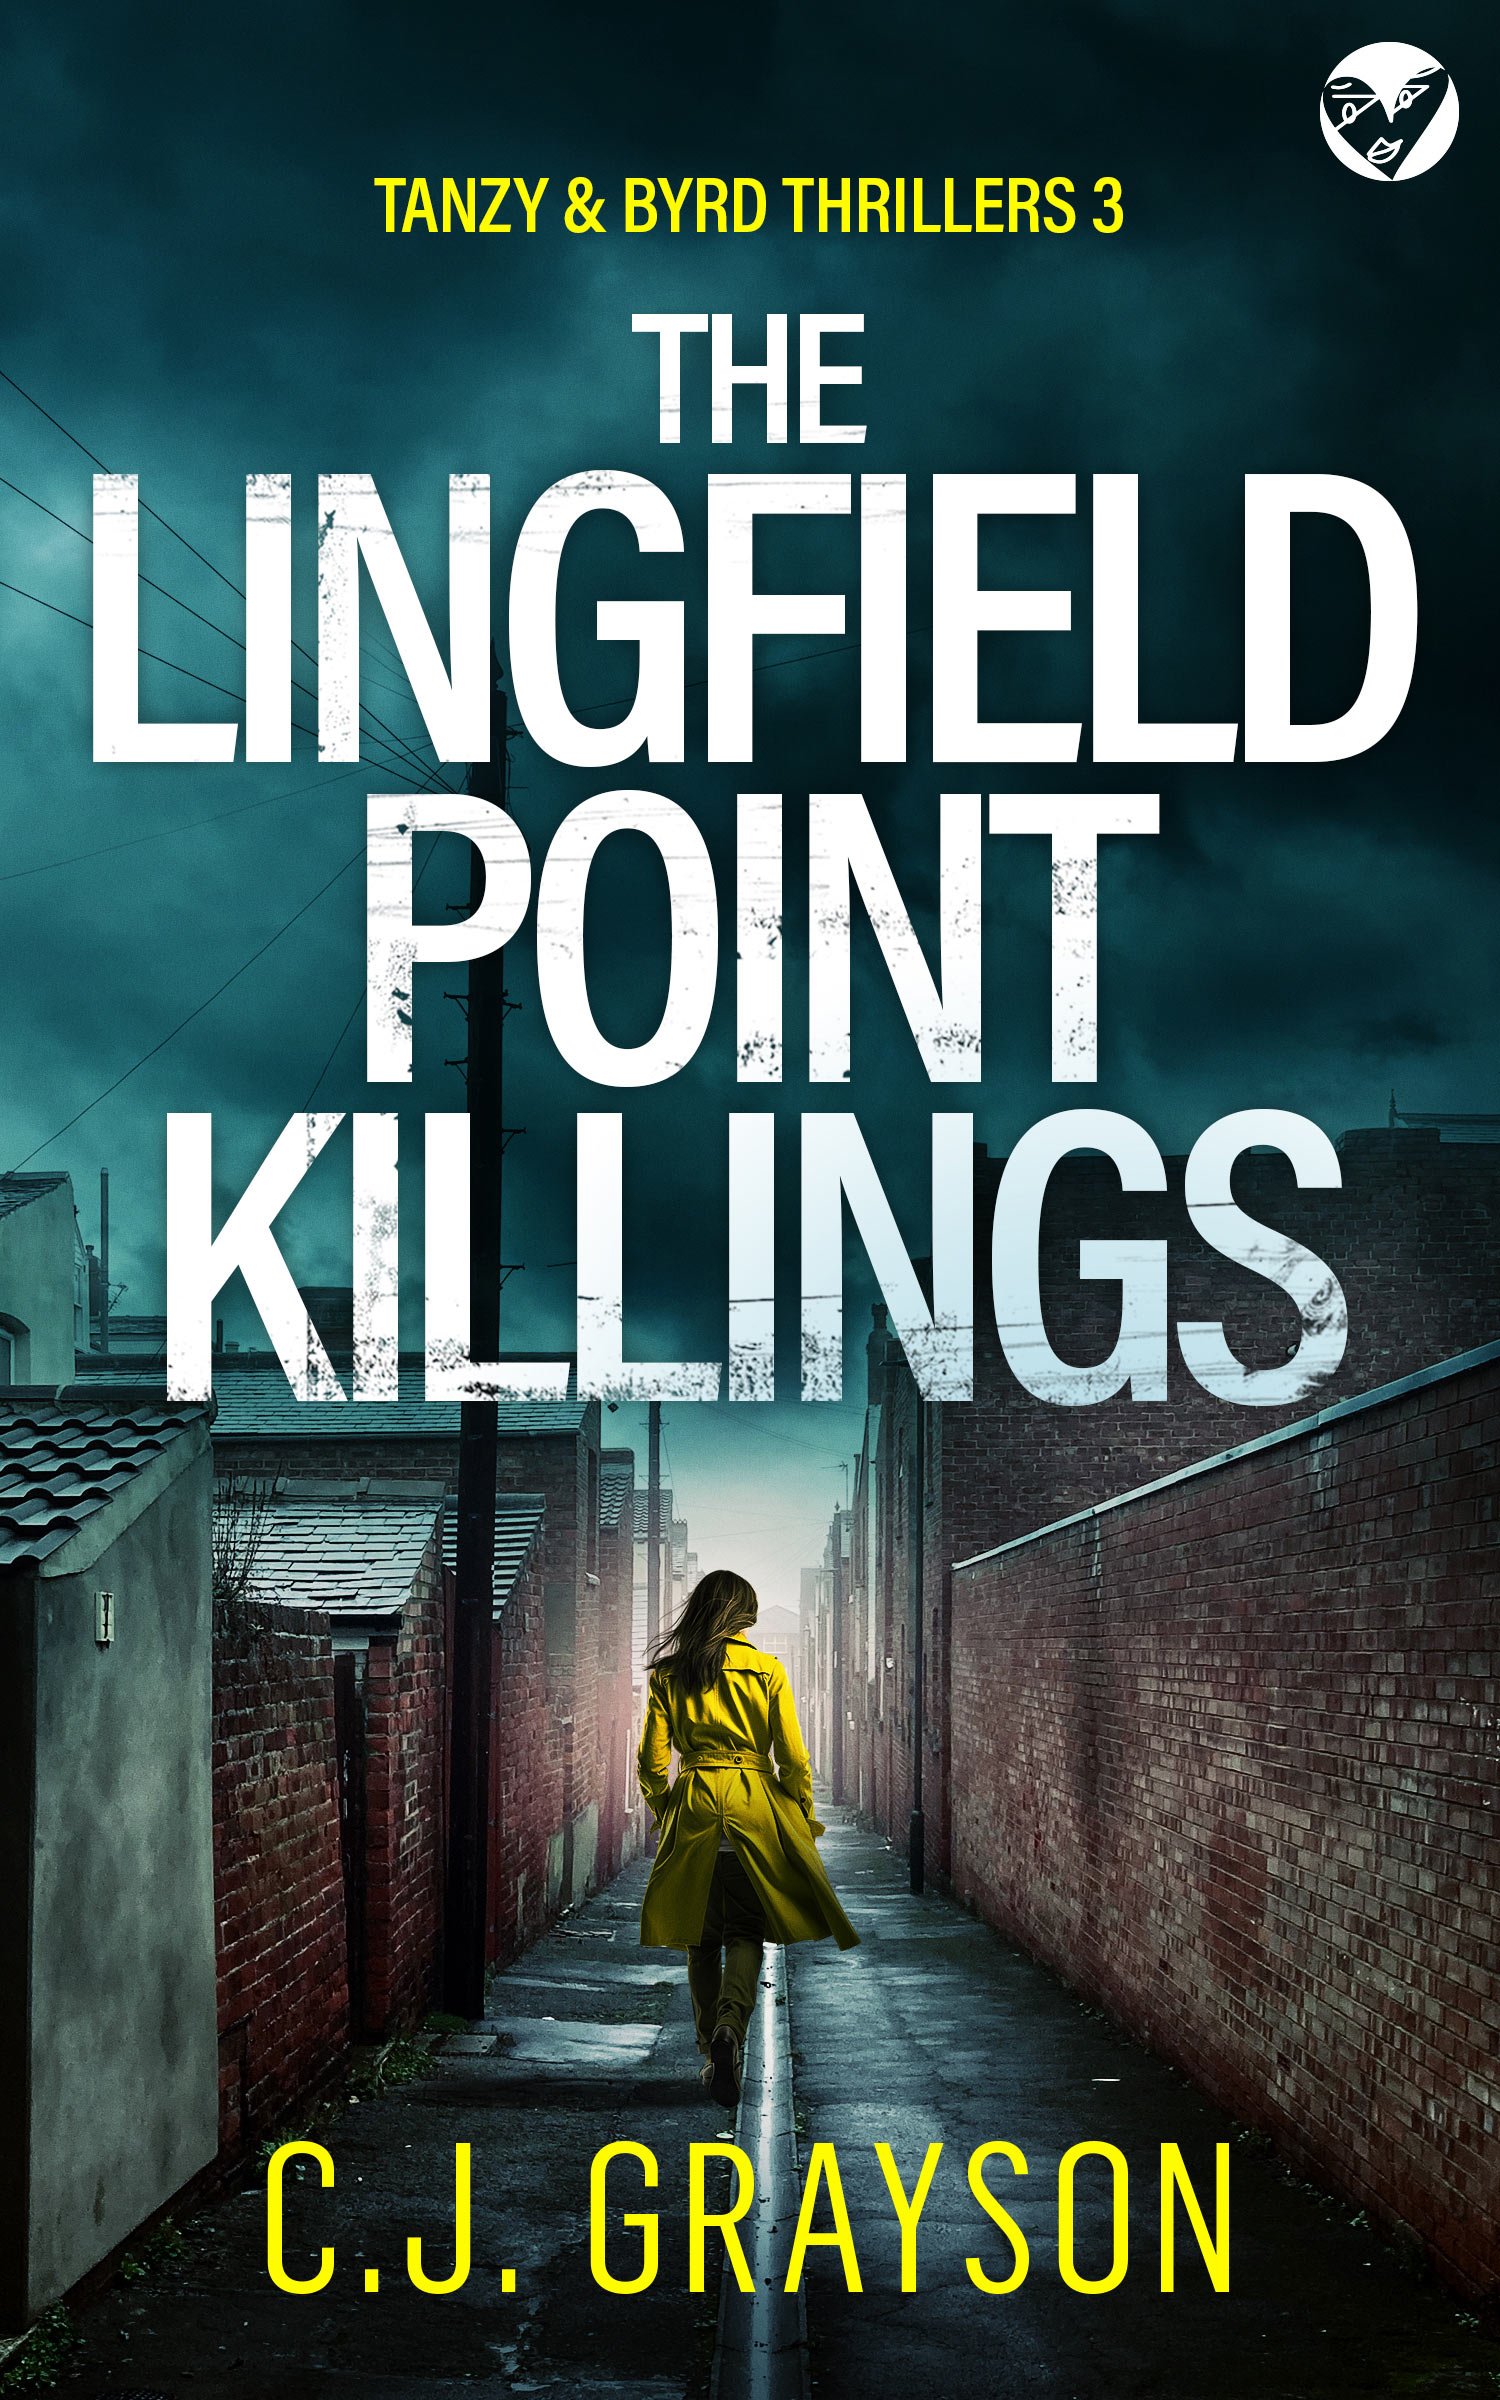 THE LINGFIELD POINT KILLINGS 603K cover publish.jpg